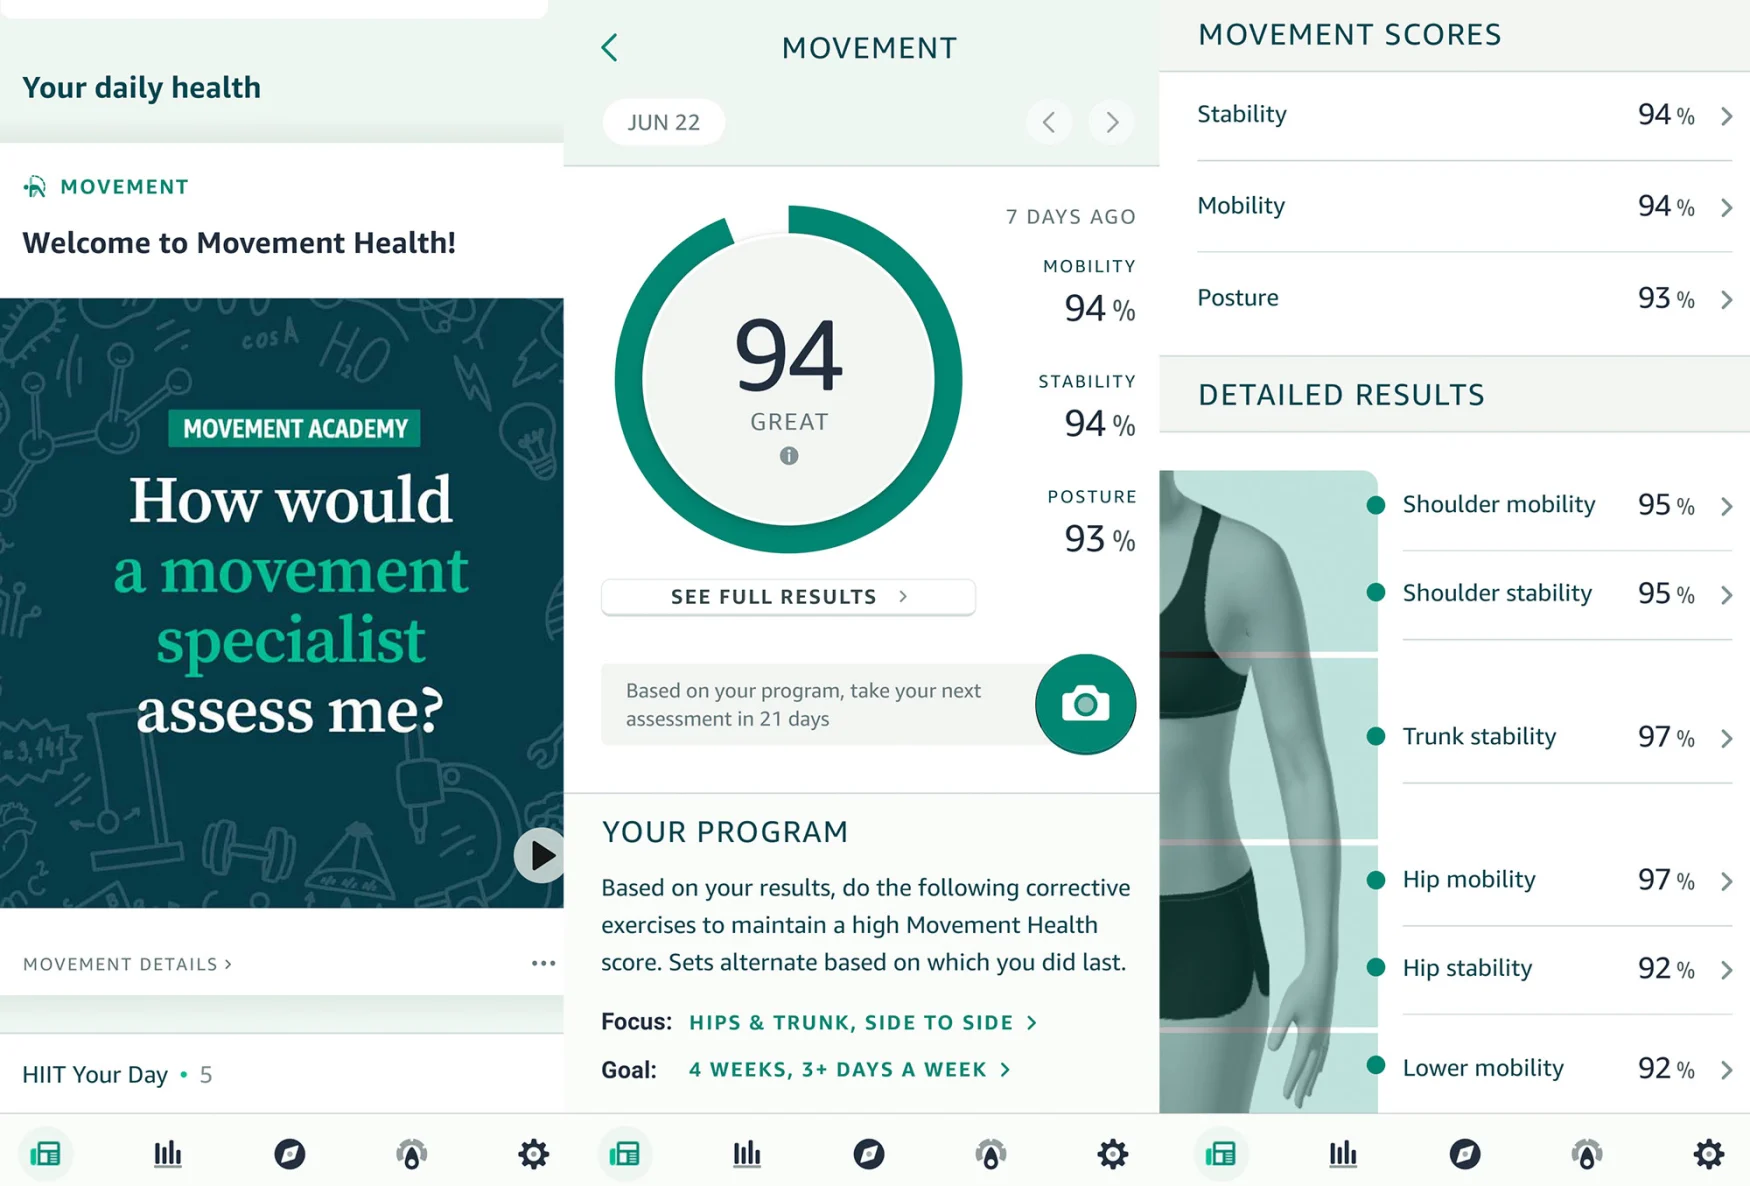 Amazon Halo Movement Health app screenshots